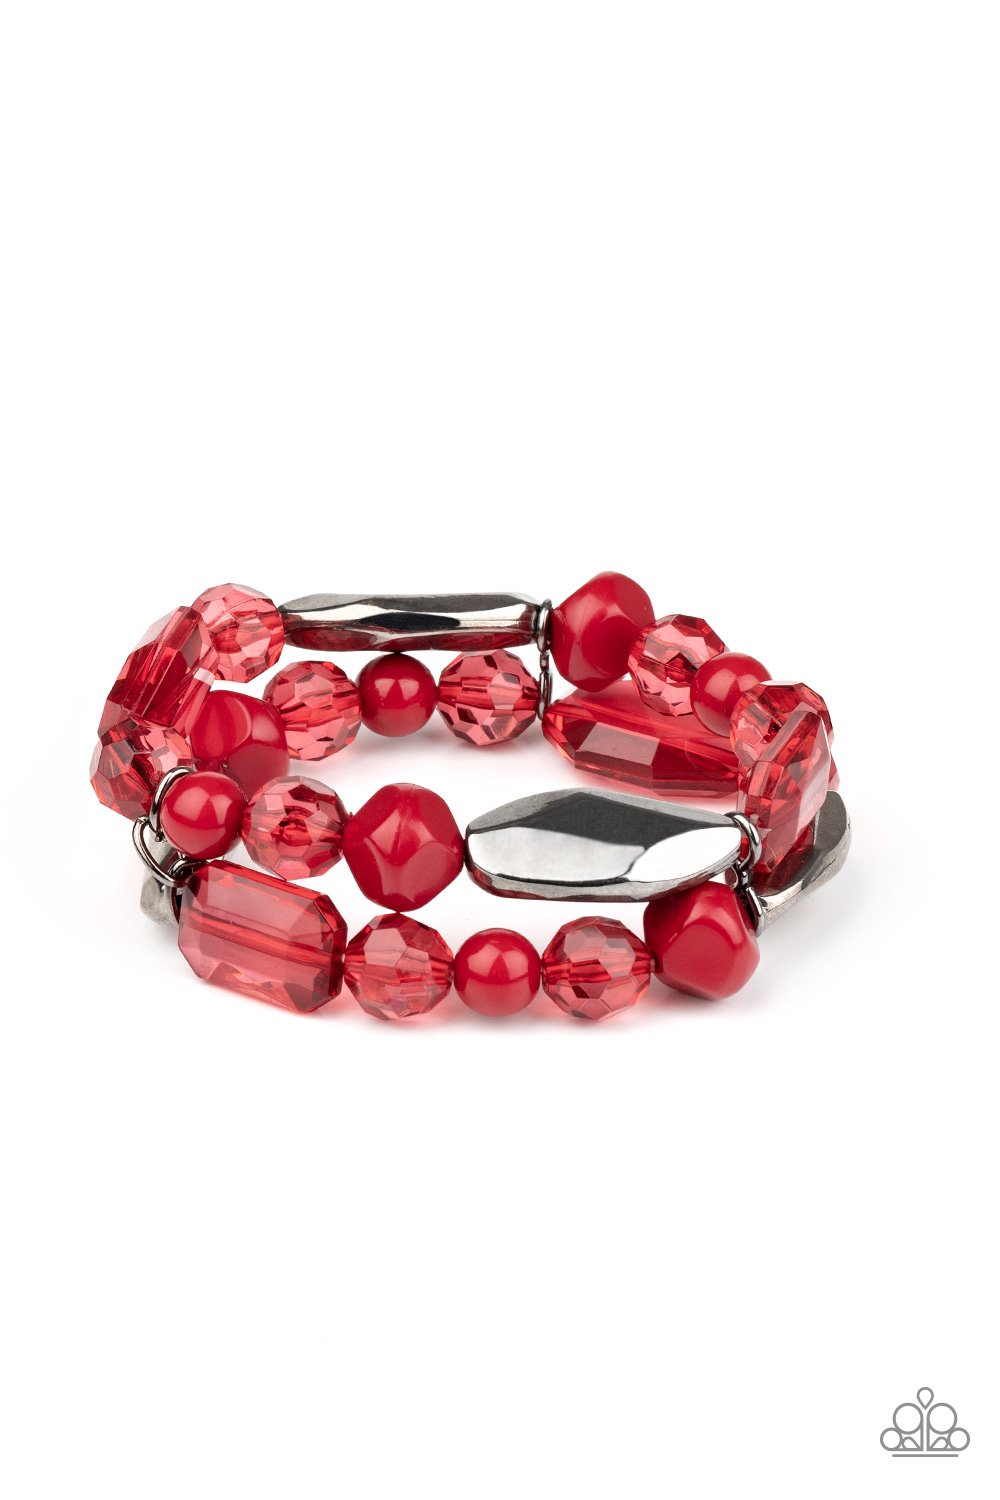 Rockin' Rock Candy Red (Gunmetal) Bracelet freeshipping - JewLz4u Gemstone Gallery